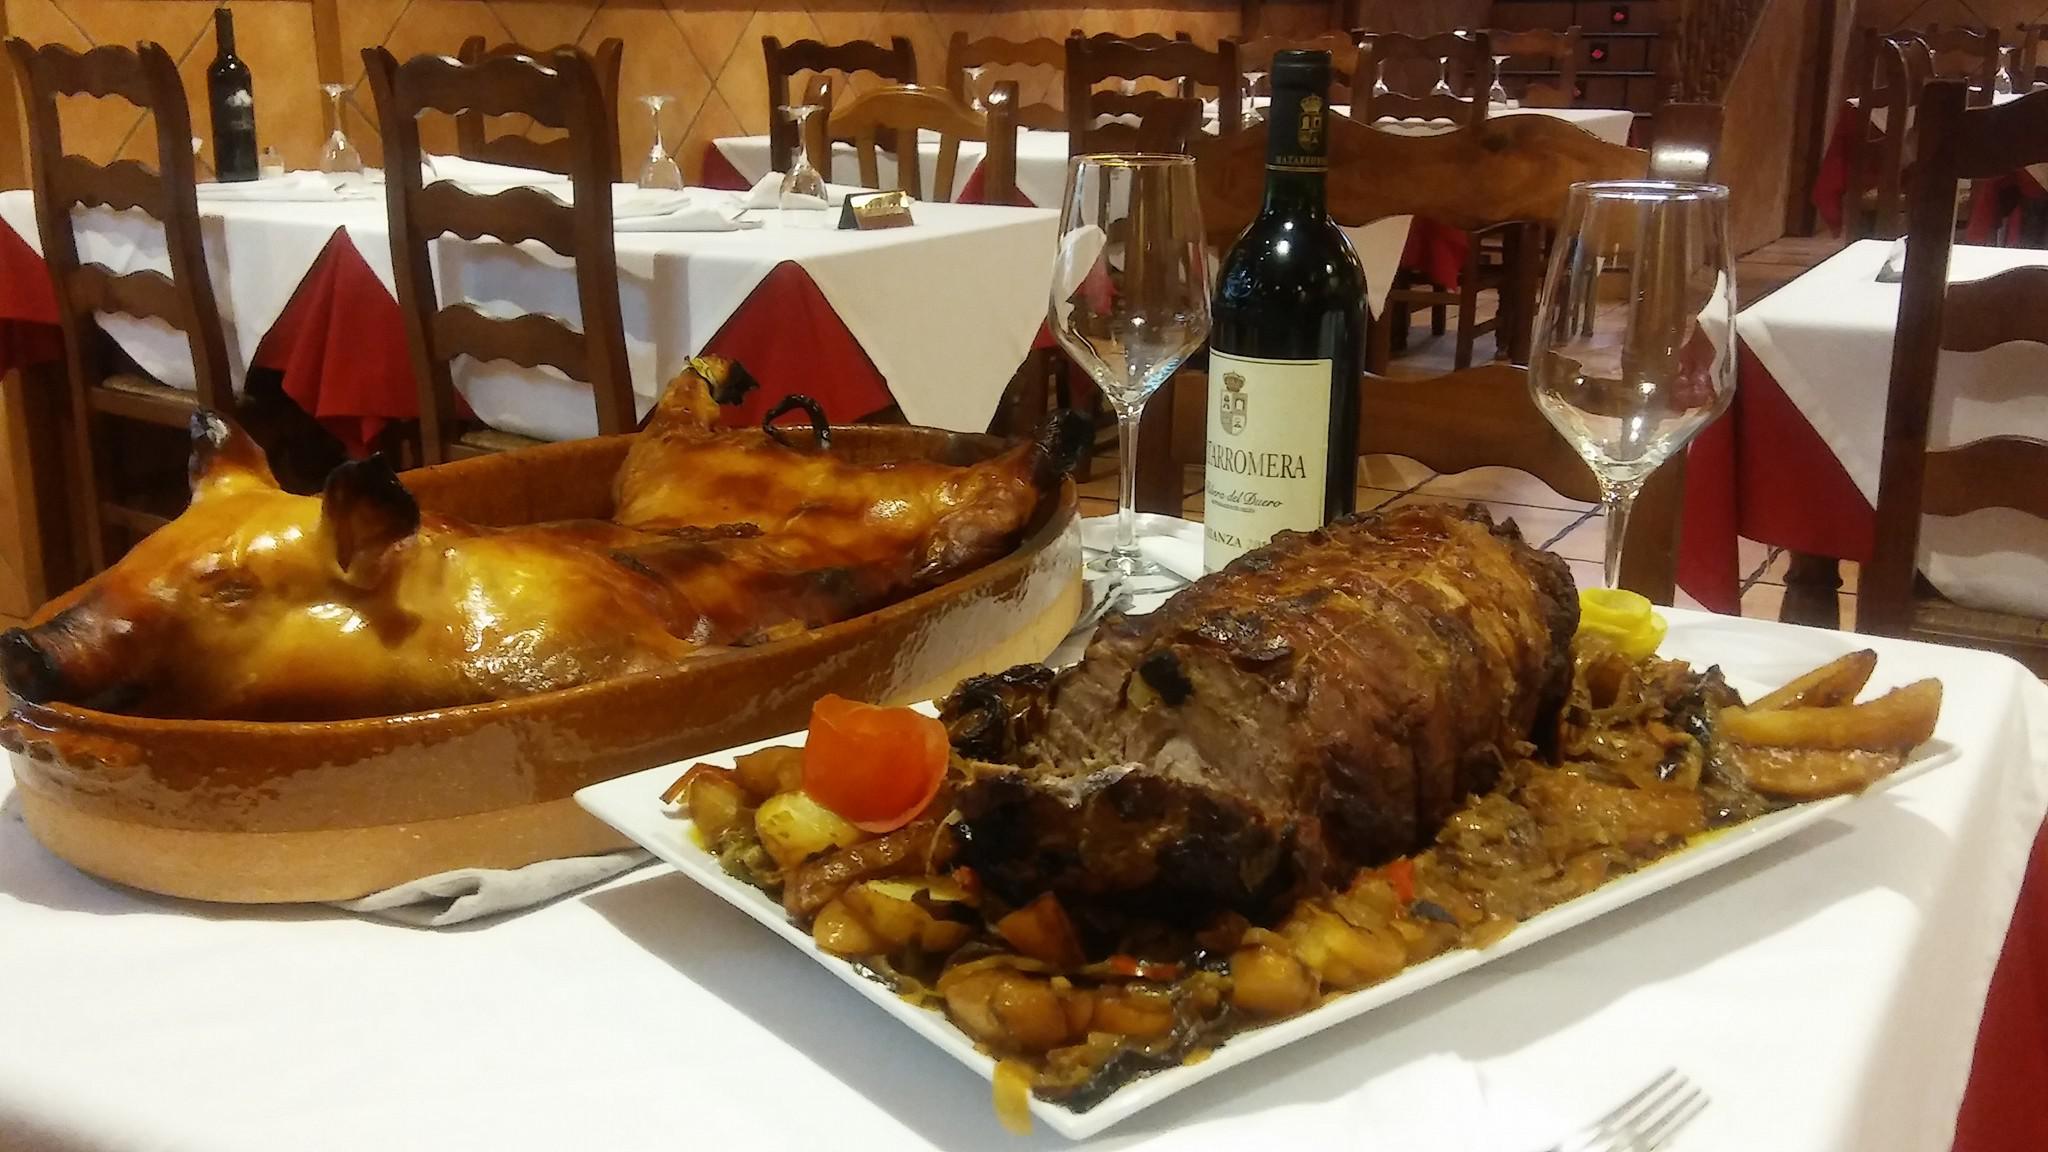 Images Restaurante La Matanza Castellana